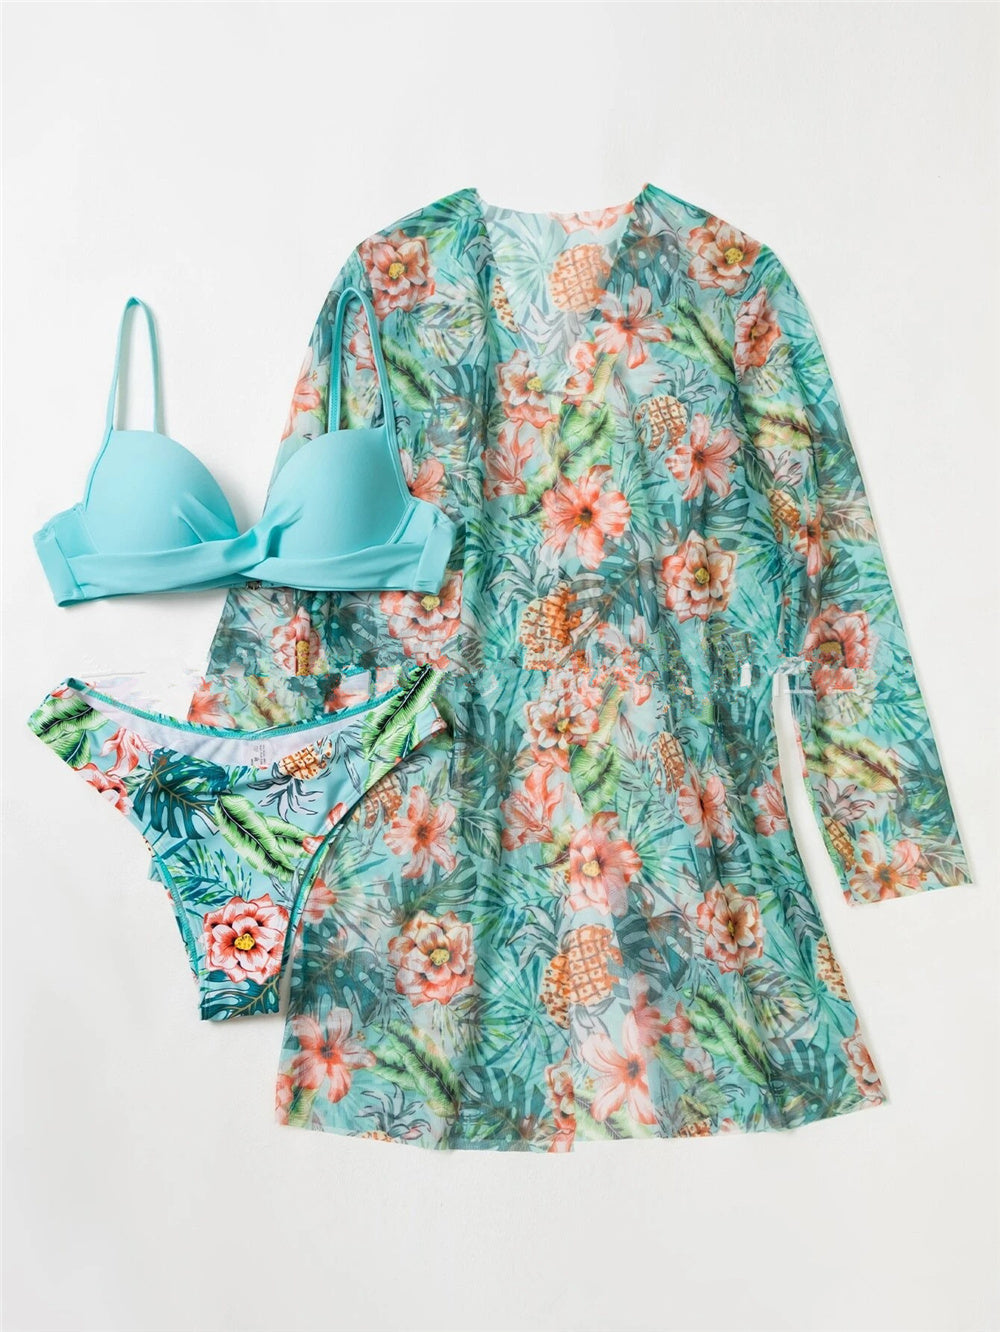 Trending New Three Pieces Bikinis Set - Cover Up Women Floral Print Push Up Swimsuit - Long Sleeve Twist Swimwear Bathing Suit (TB8D)(1U26)(F26)